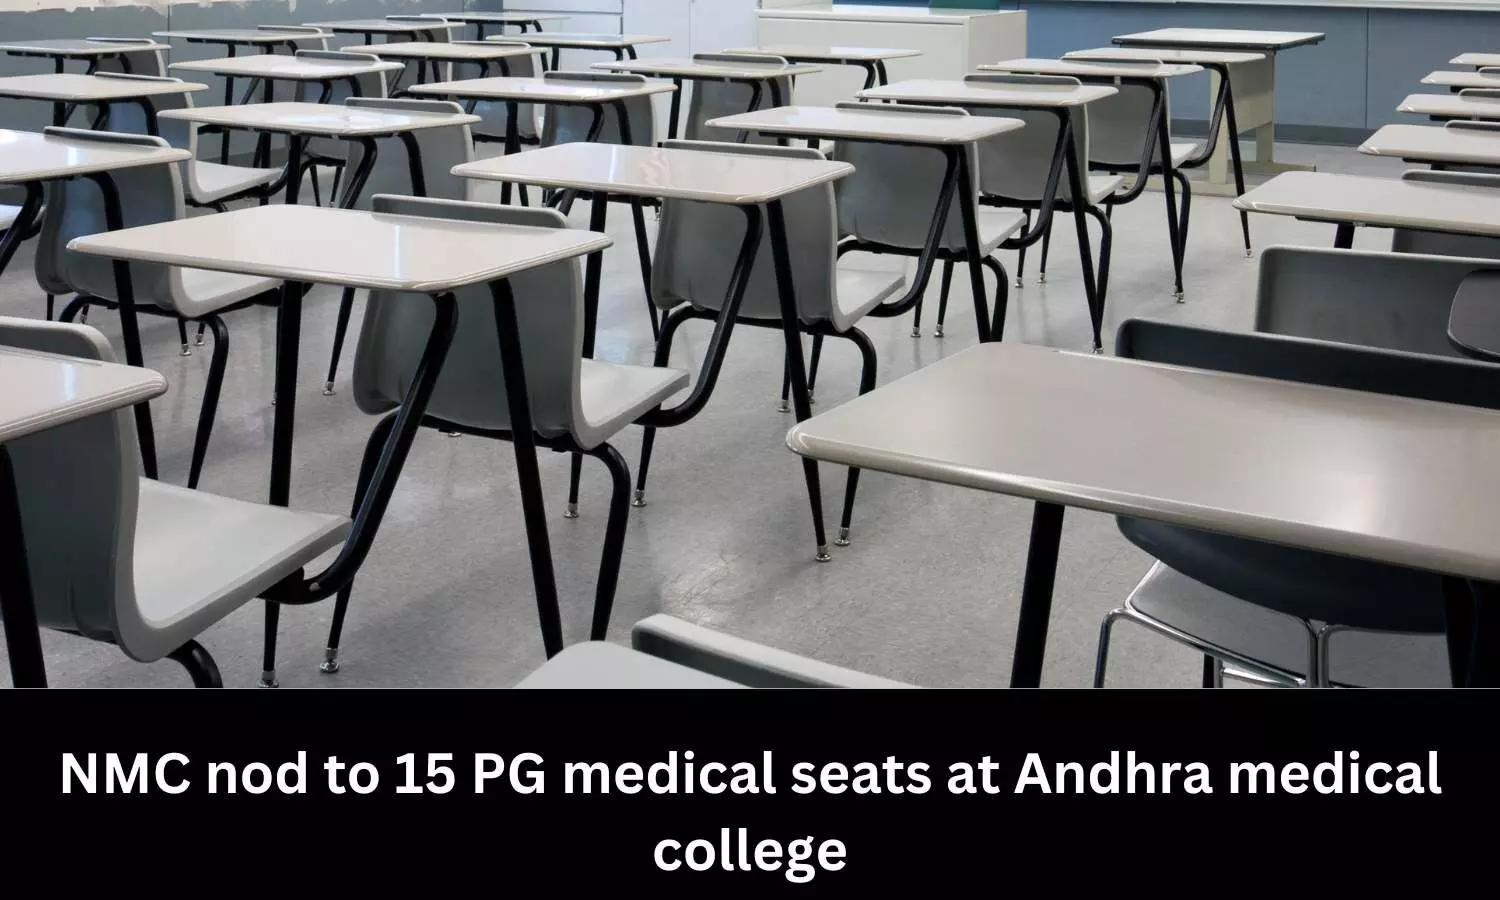 Andhra Medical College gets NMC nod for 15 PG medical seats